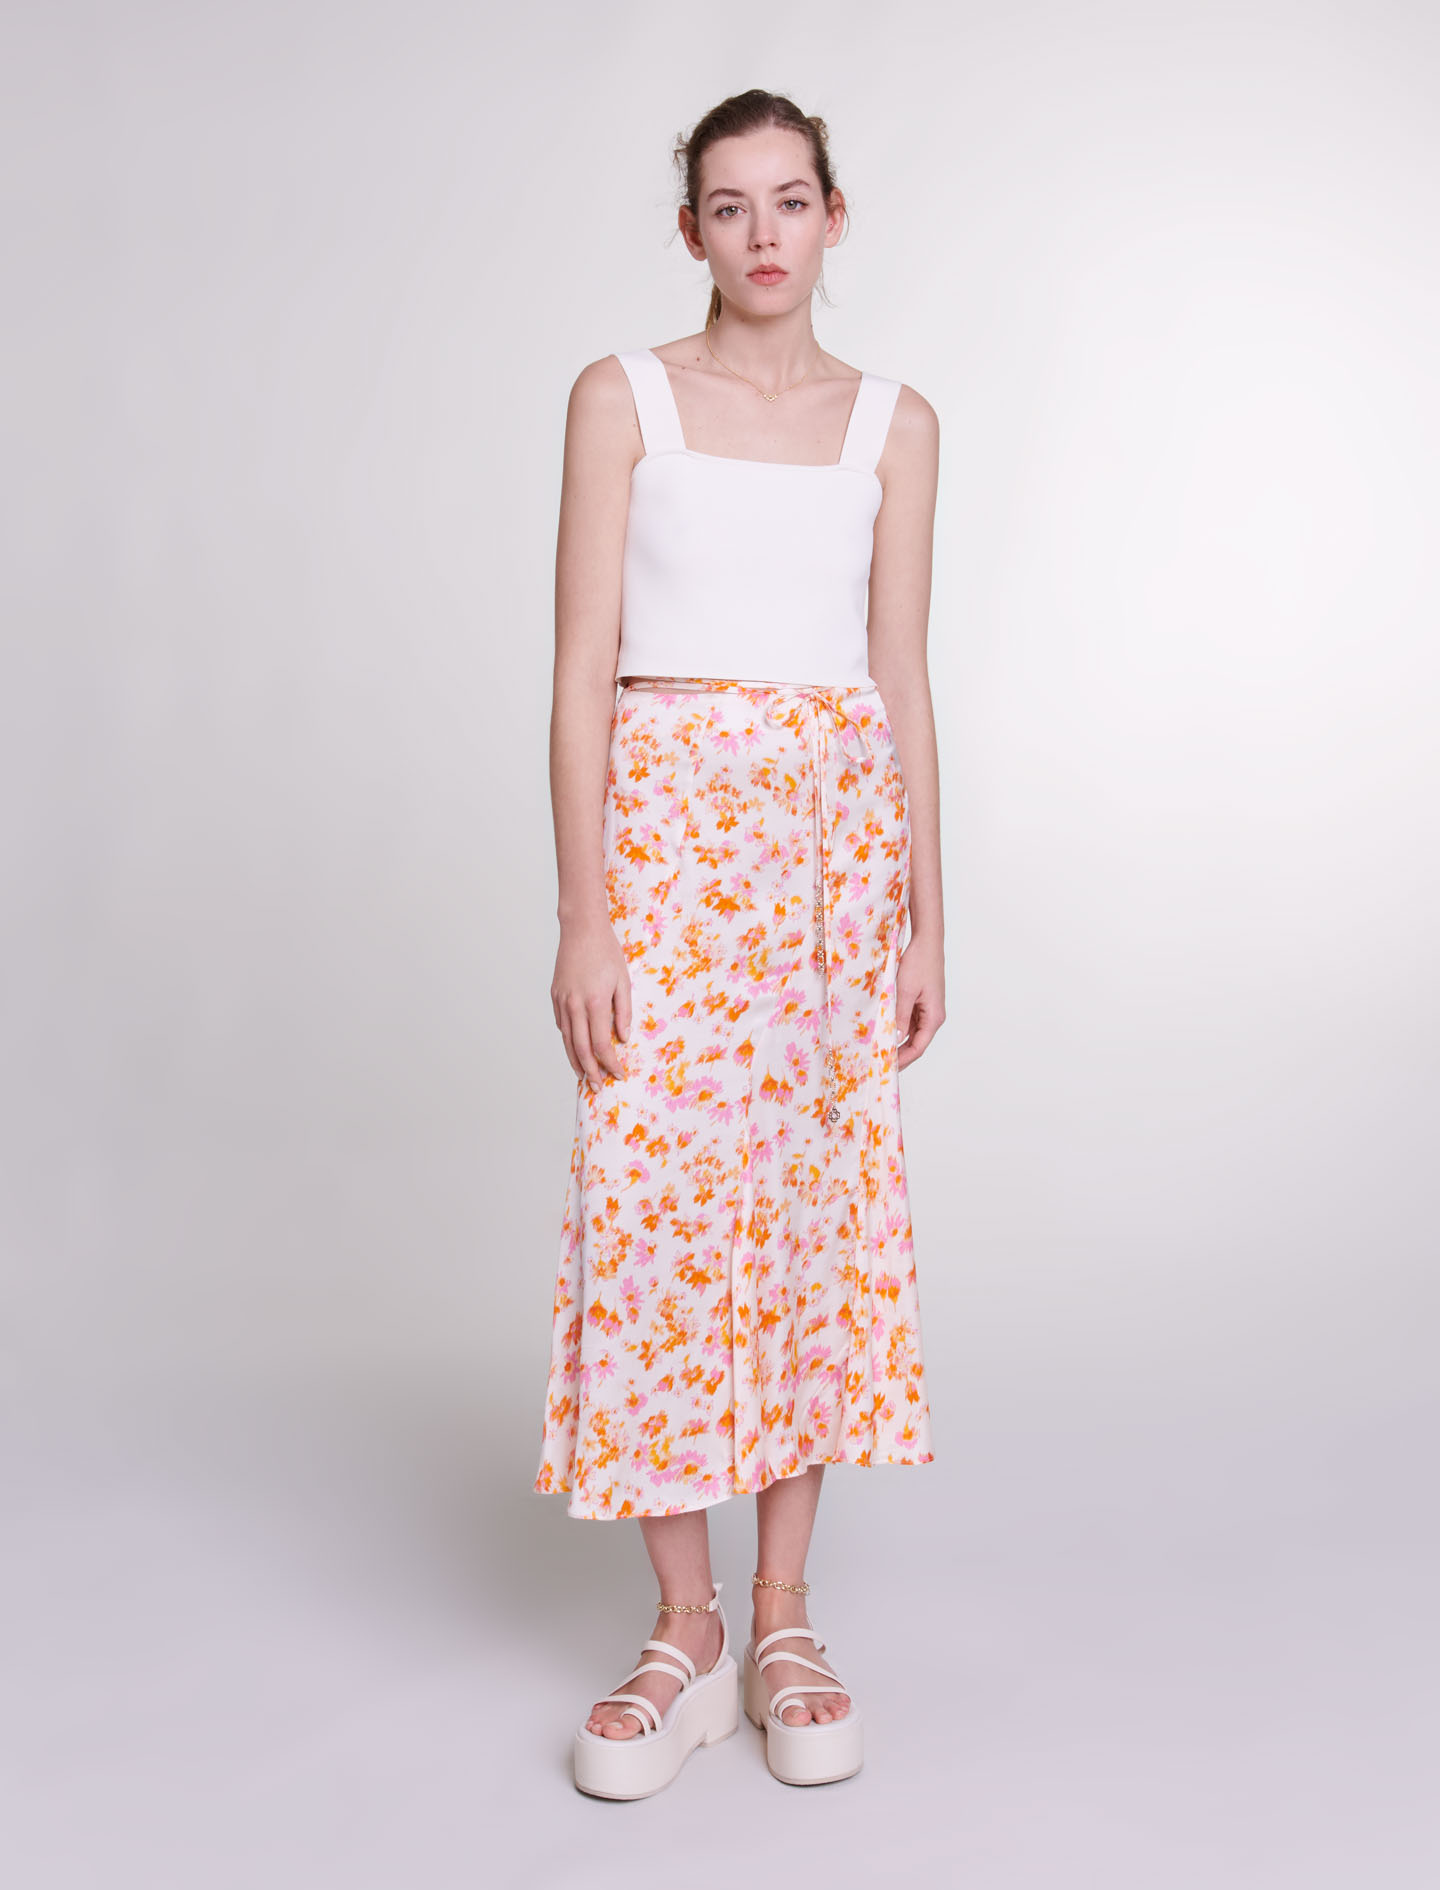 Mixte's viscose Satin-effect floral skirt for Spring/Summer, size Mixte-Skirts & Shorts-US XL / FR 41, in color Orange Flower Print /